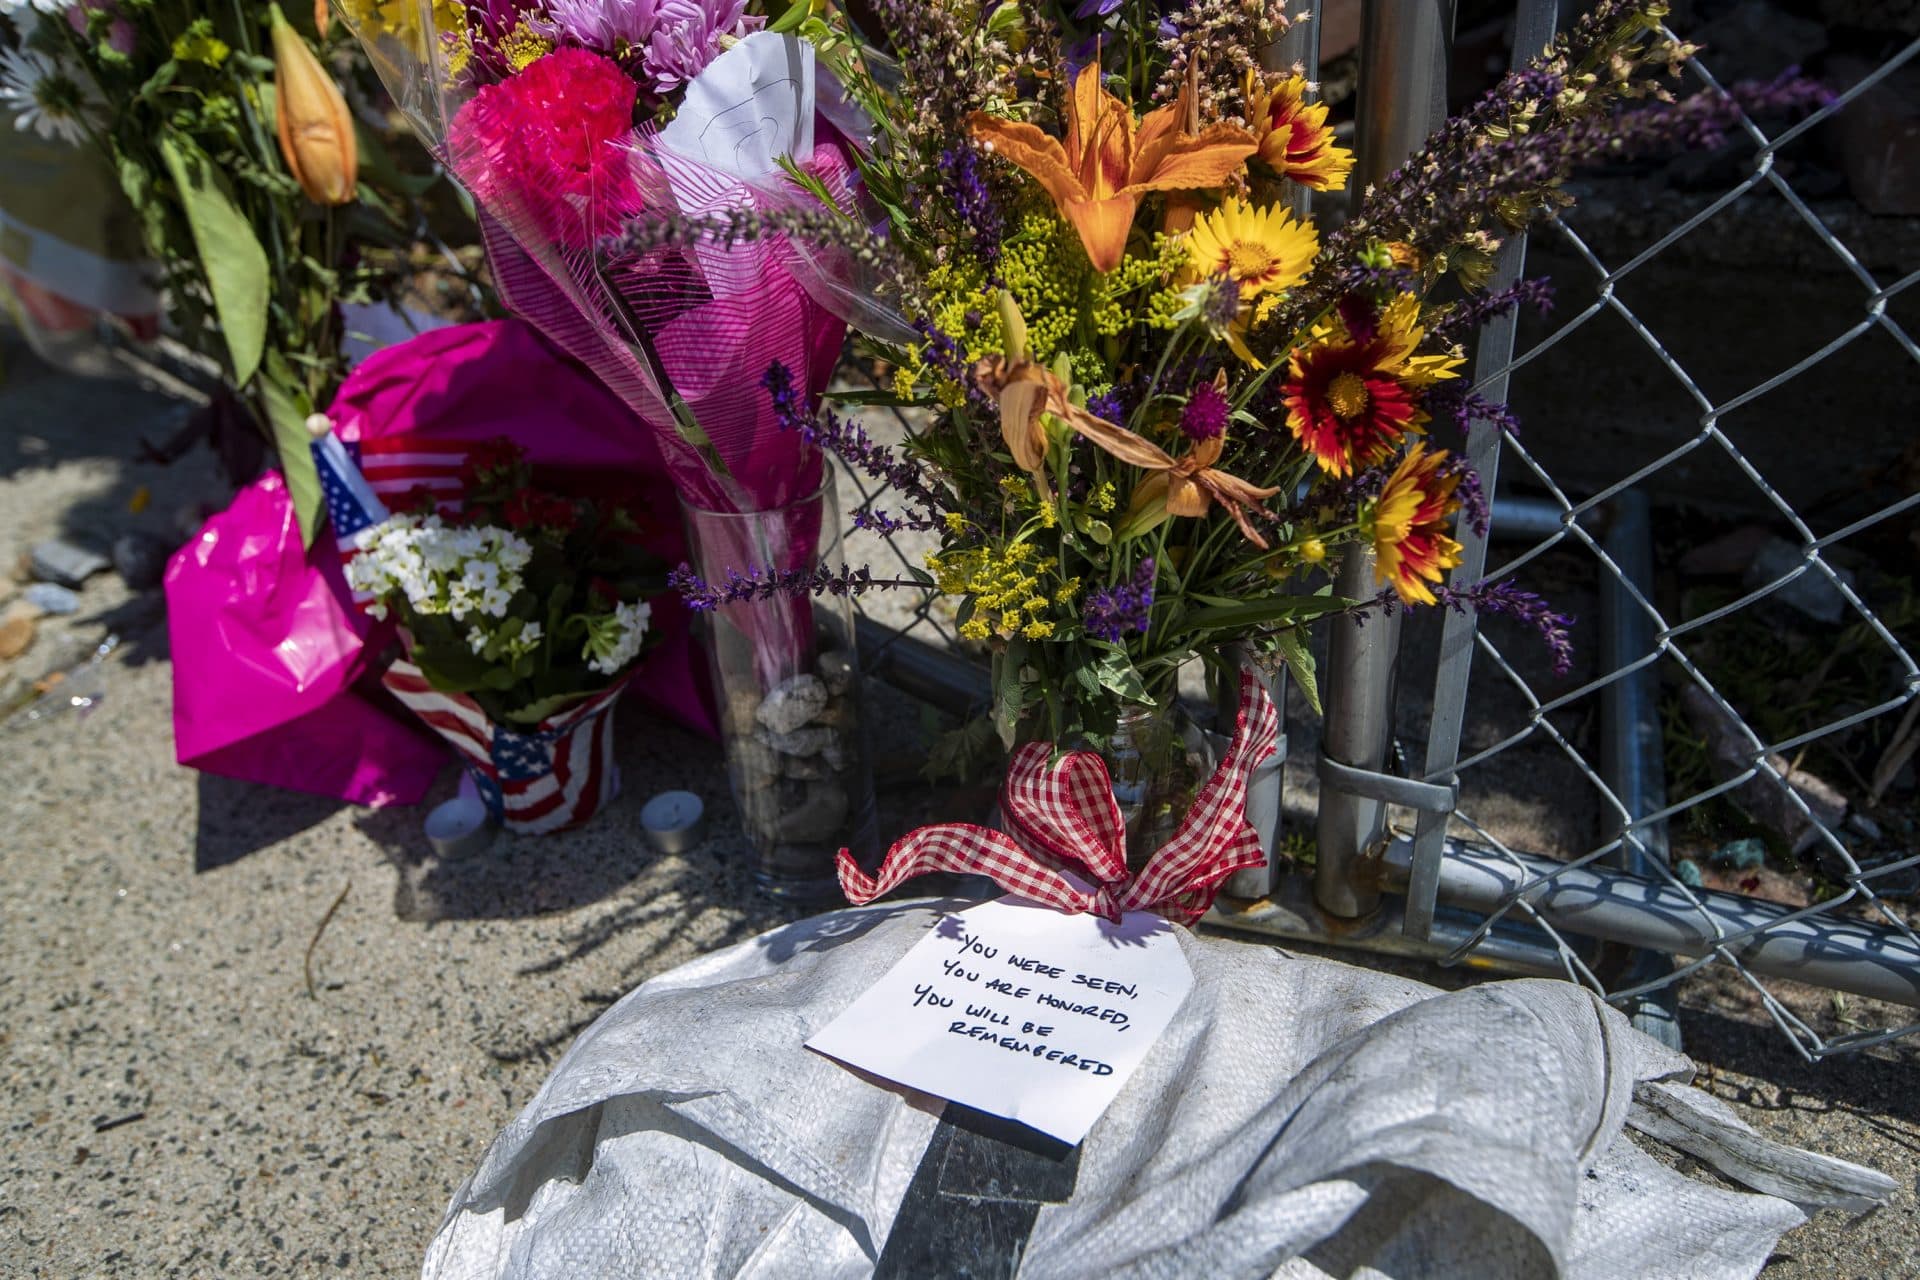 Remembrances were left near the scene in Winthrop. (Jesse Costa/WBUR)